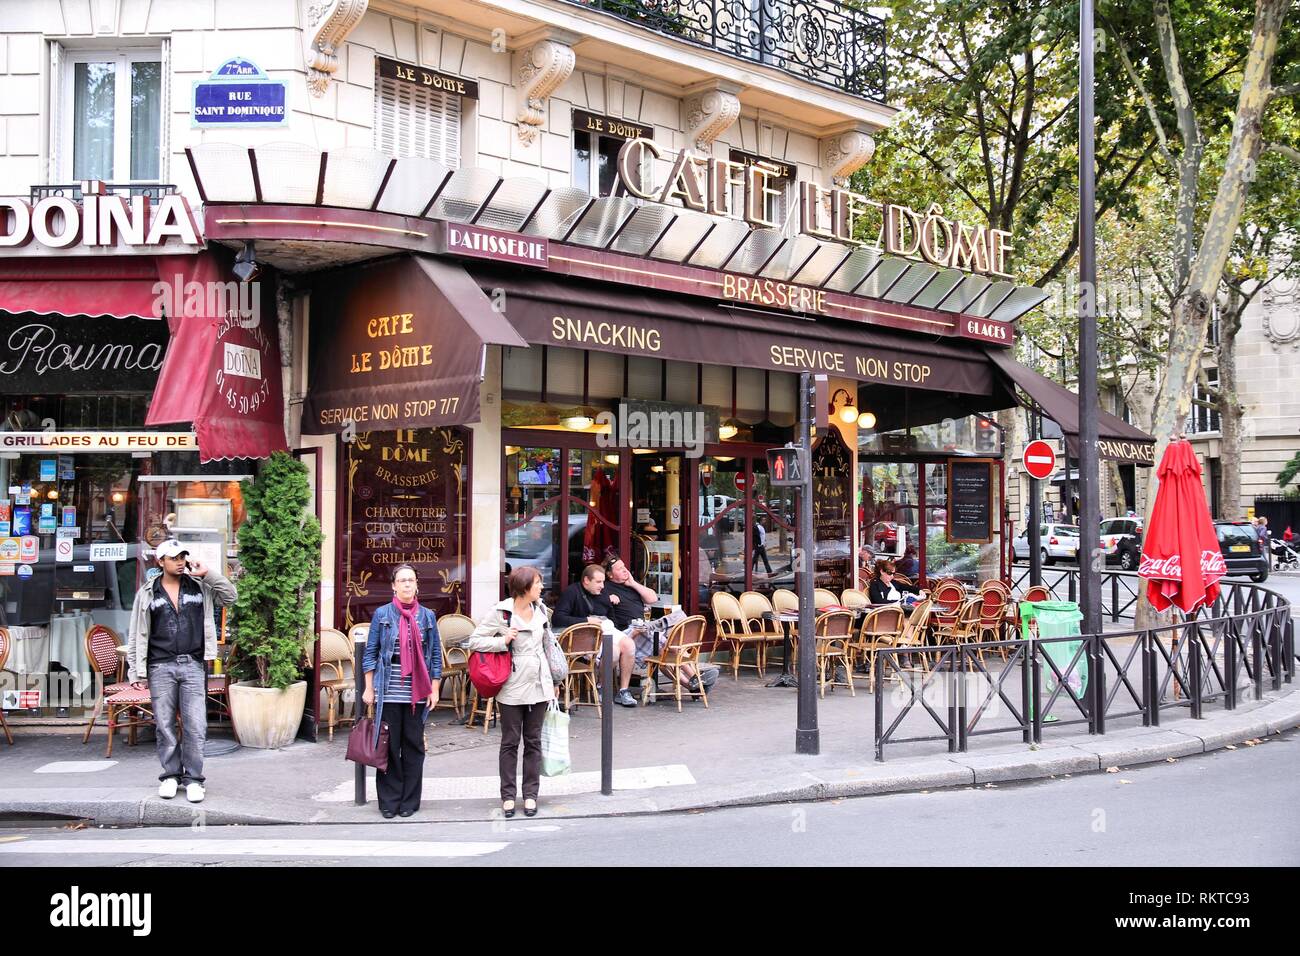 PARIS - JULY 21: People visit Cafe Le Dome on July 21, 2011 in Paris, France. Le Dome cafe is a typical establishment for Paris, one of largest metrop Stock Photo